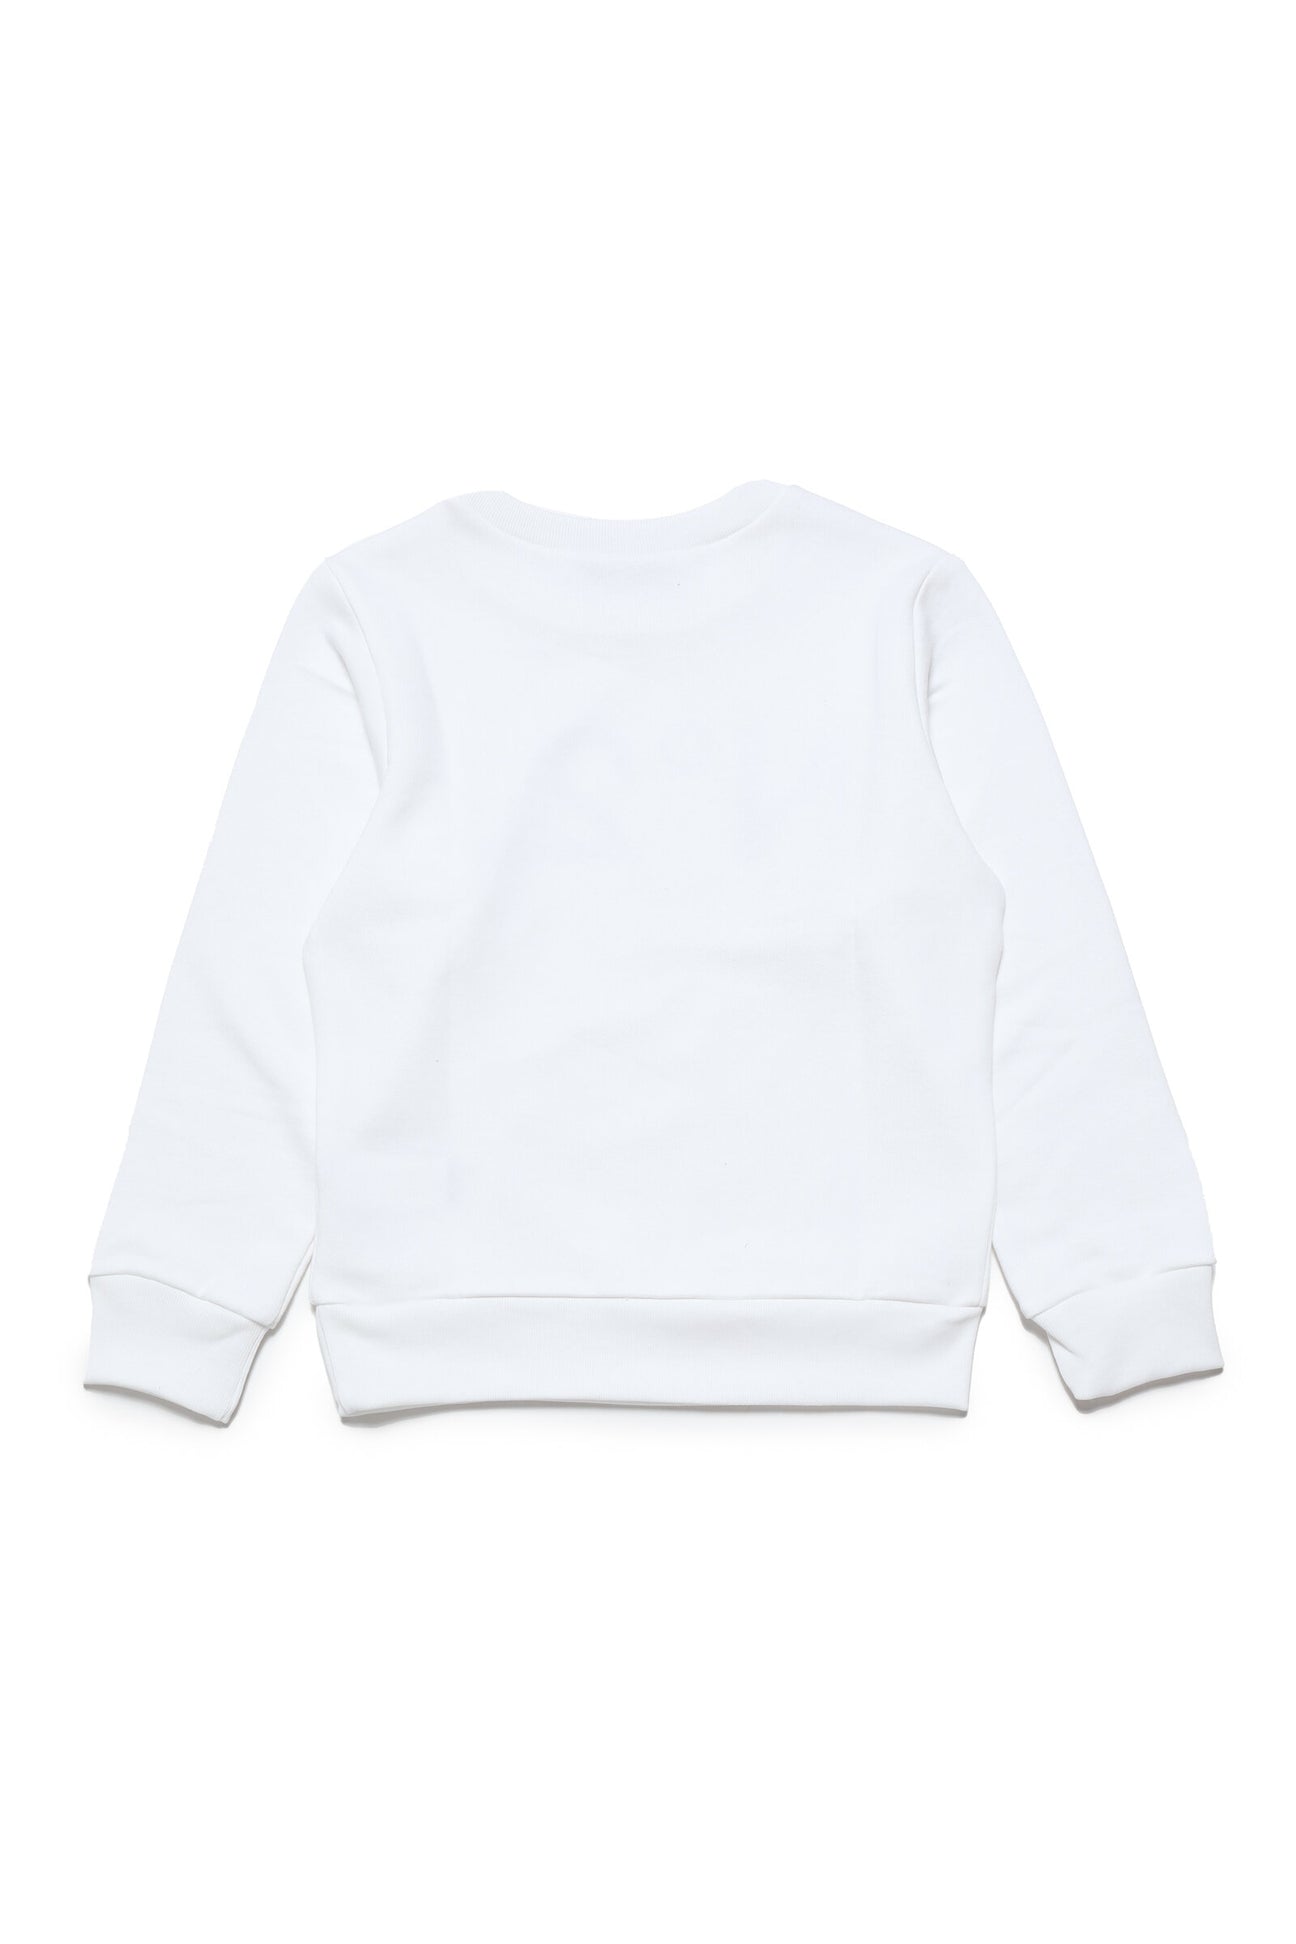 White cotton crew-neck sweatshirt with logo White cotton crew-neck sweatshirt with logo